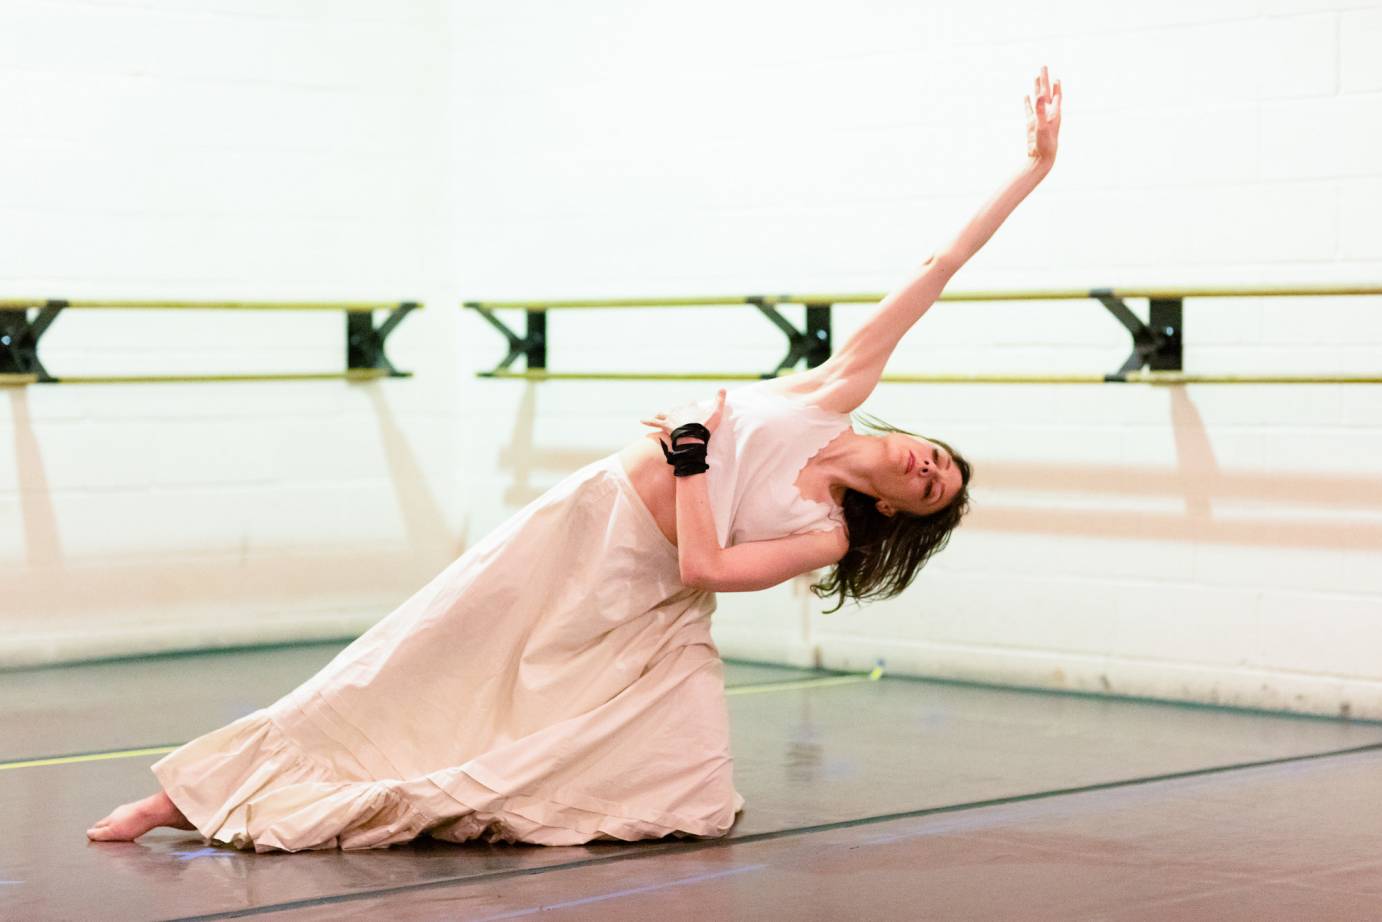 In a white dress, Alison Clancy tips her body sideways